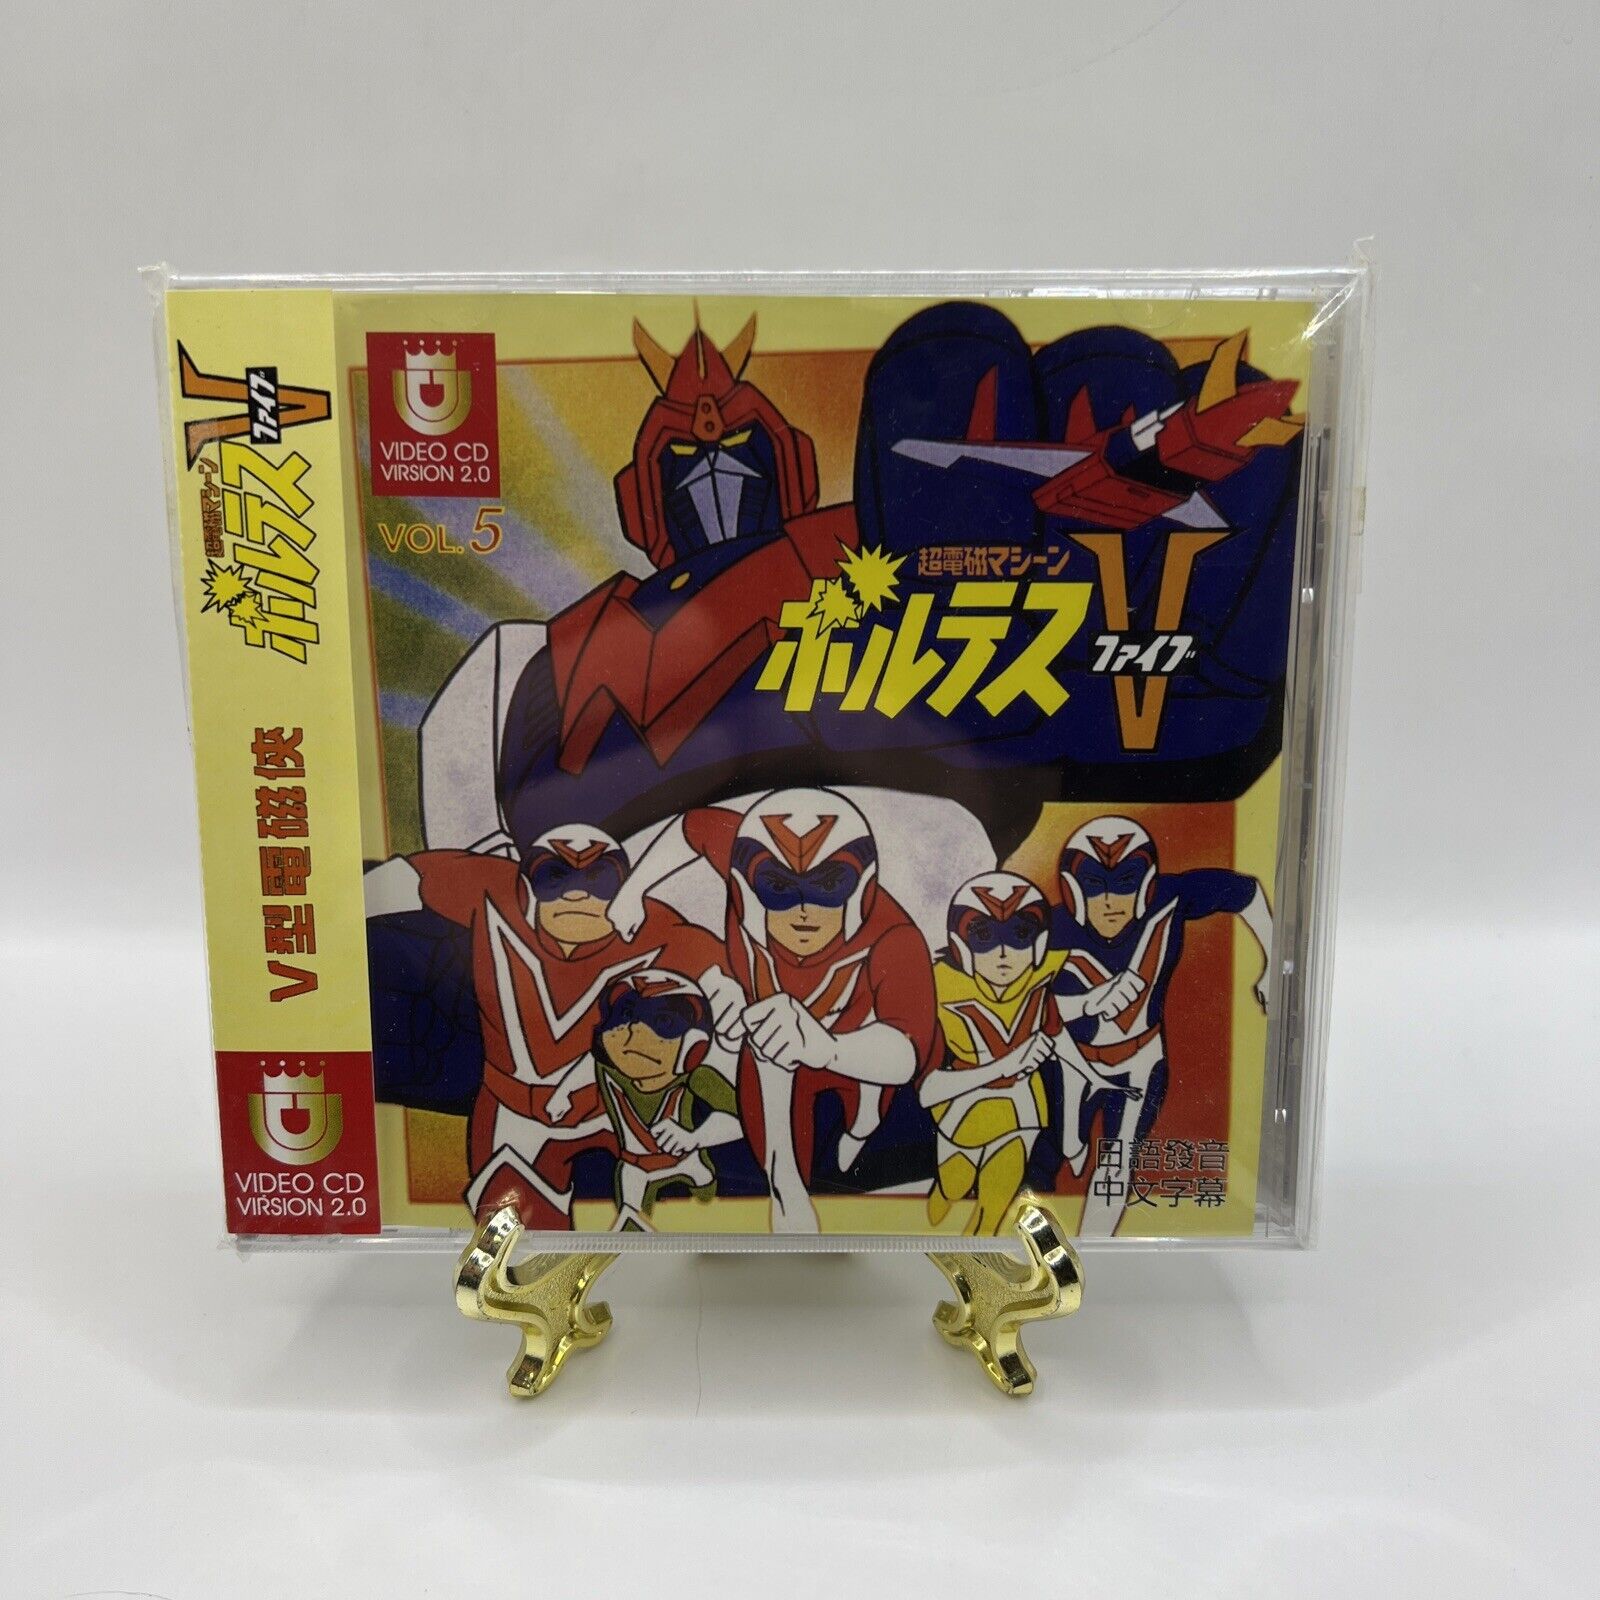 Super Rare 1997 Japanese Volume 5 Voltes Five Anime Drama JAPAN ANIME Video CD